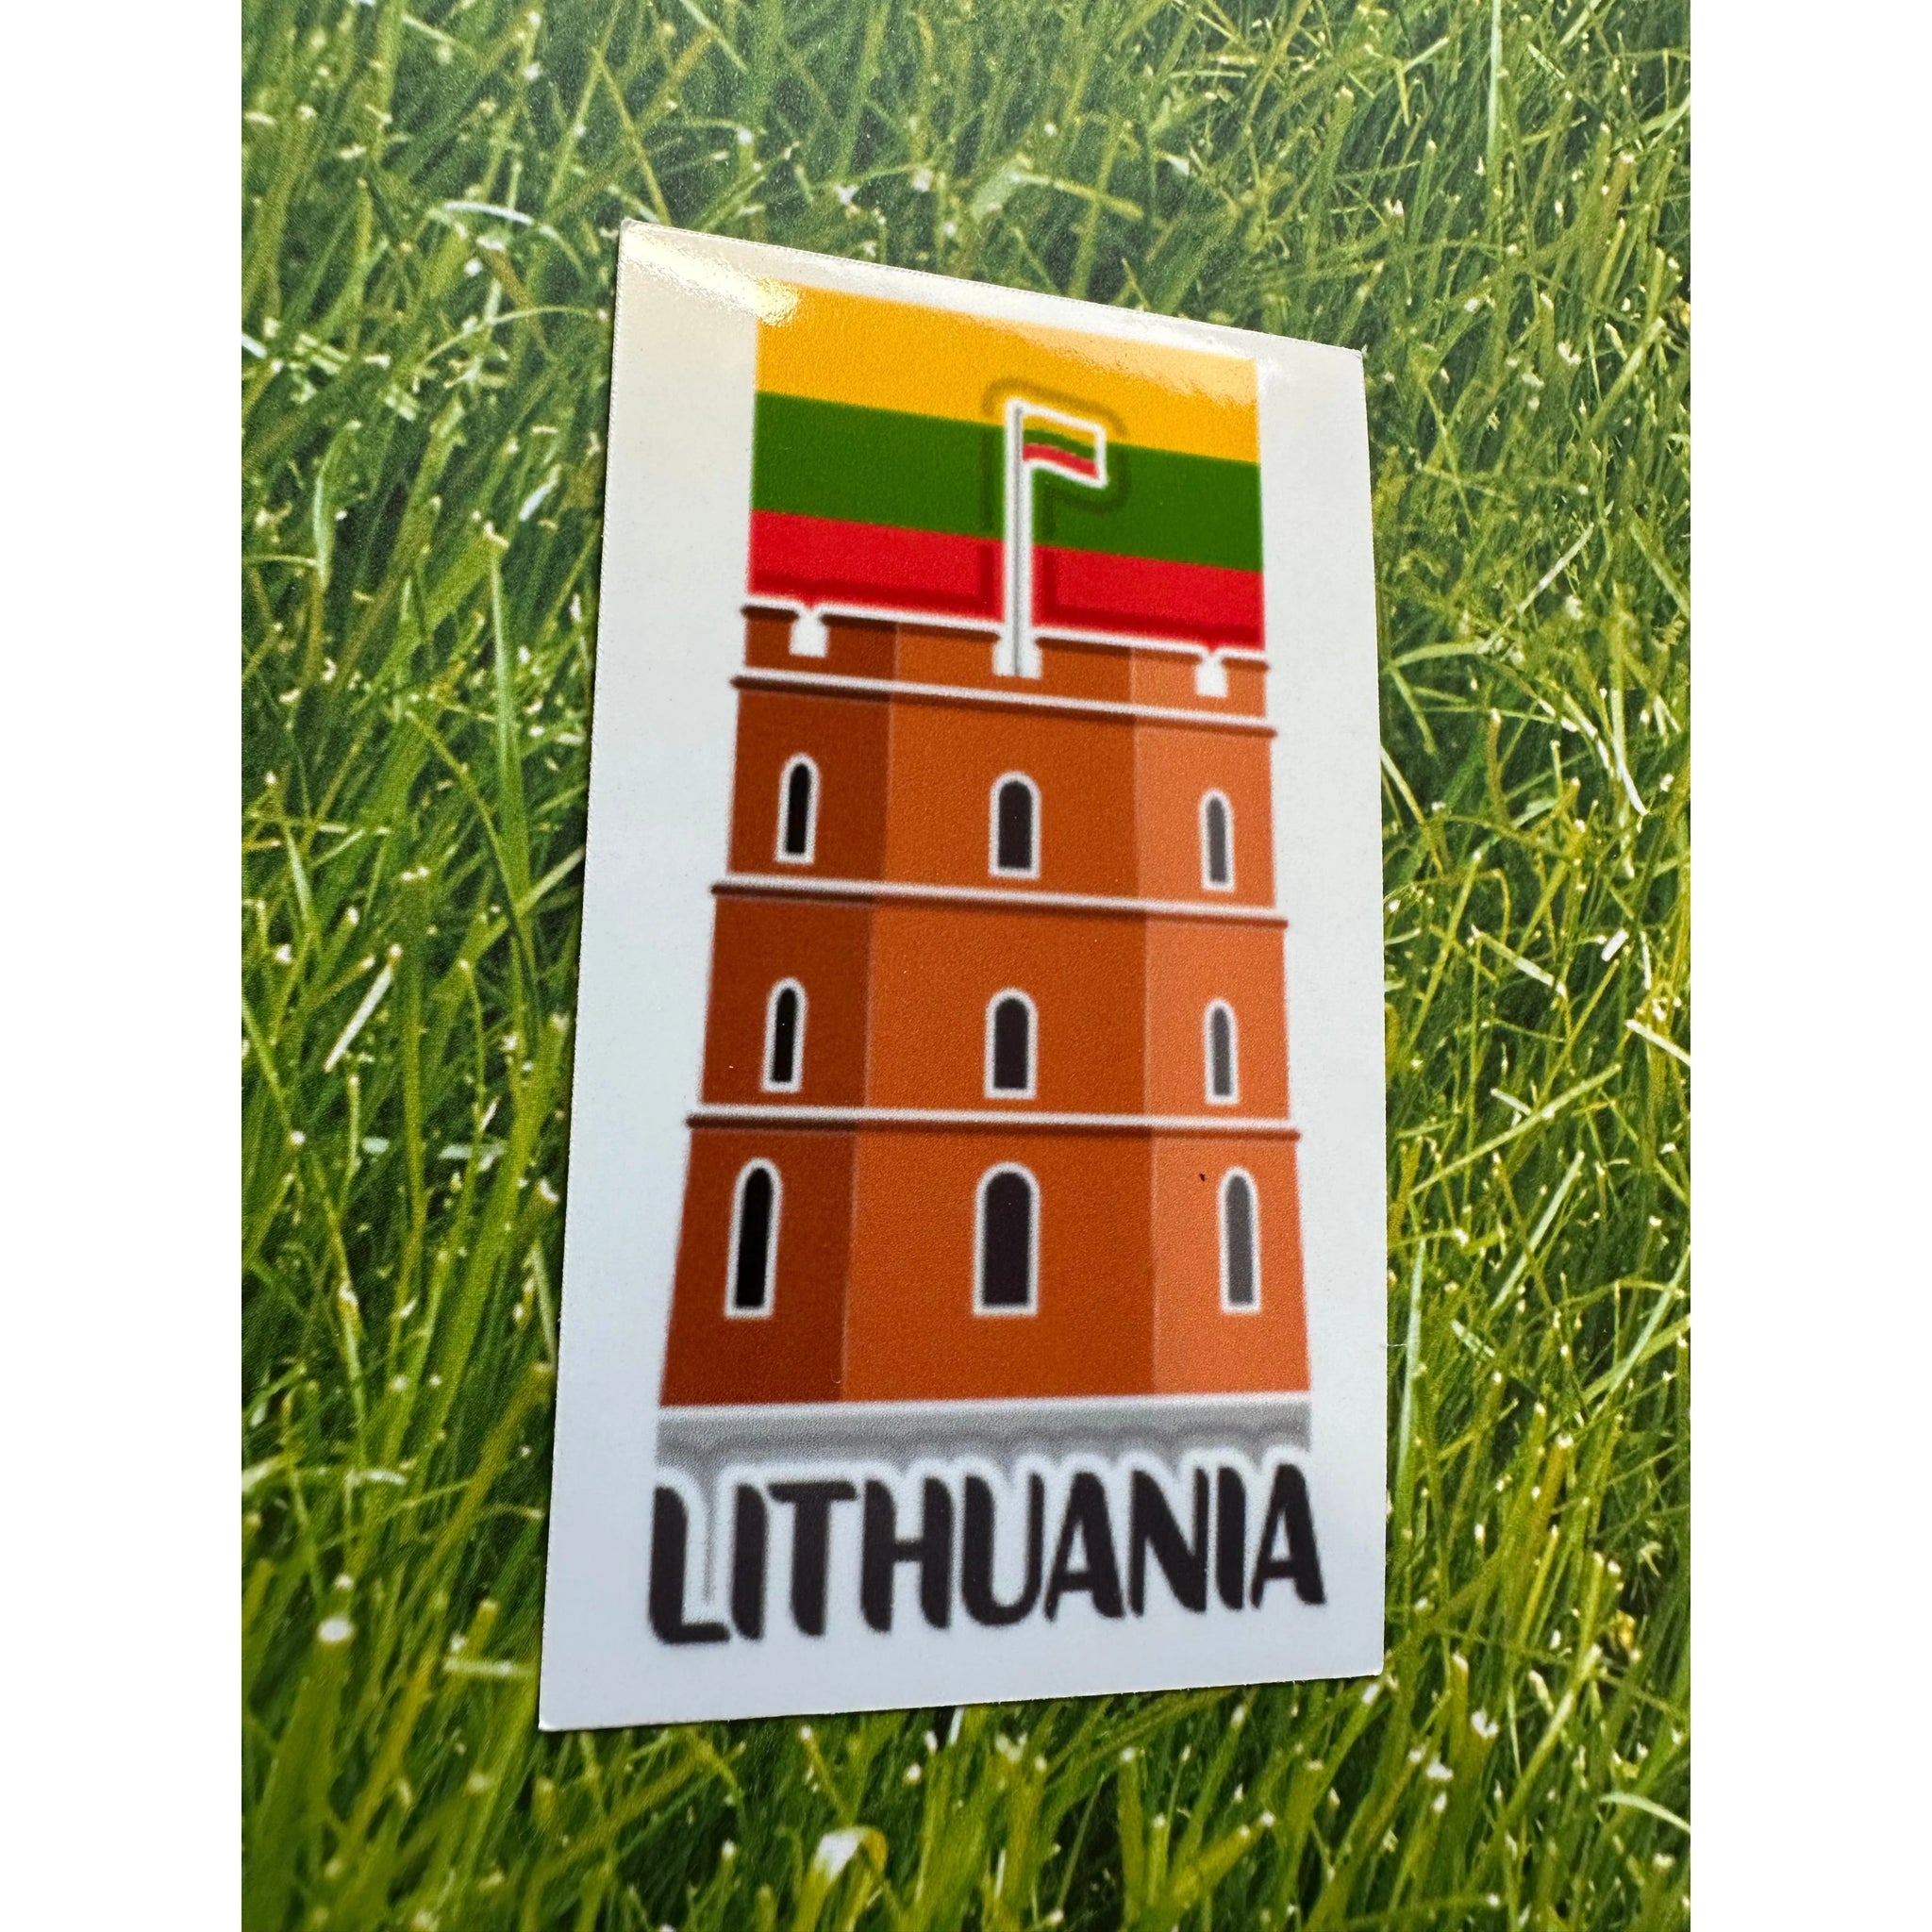 Lithuania Vinyl Decal Sticker